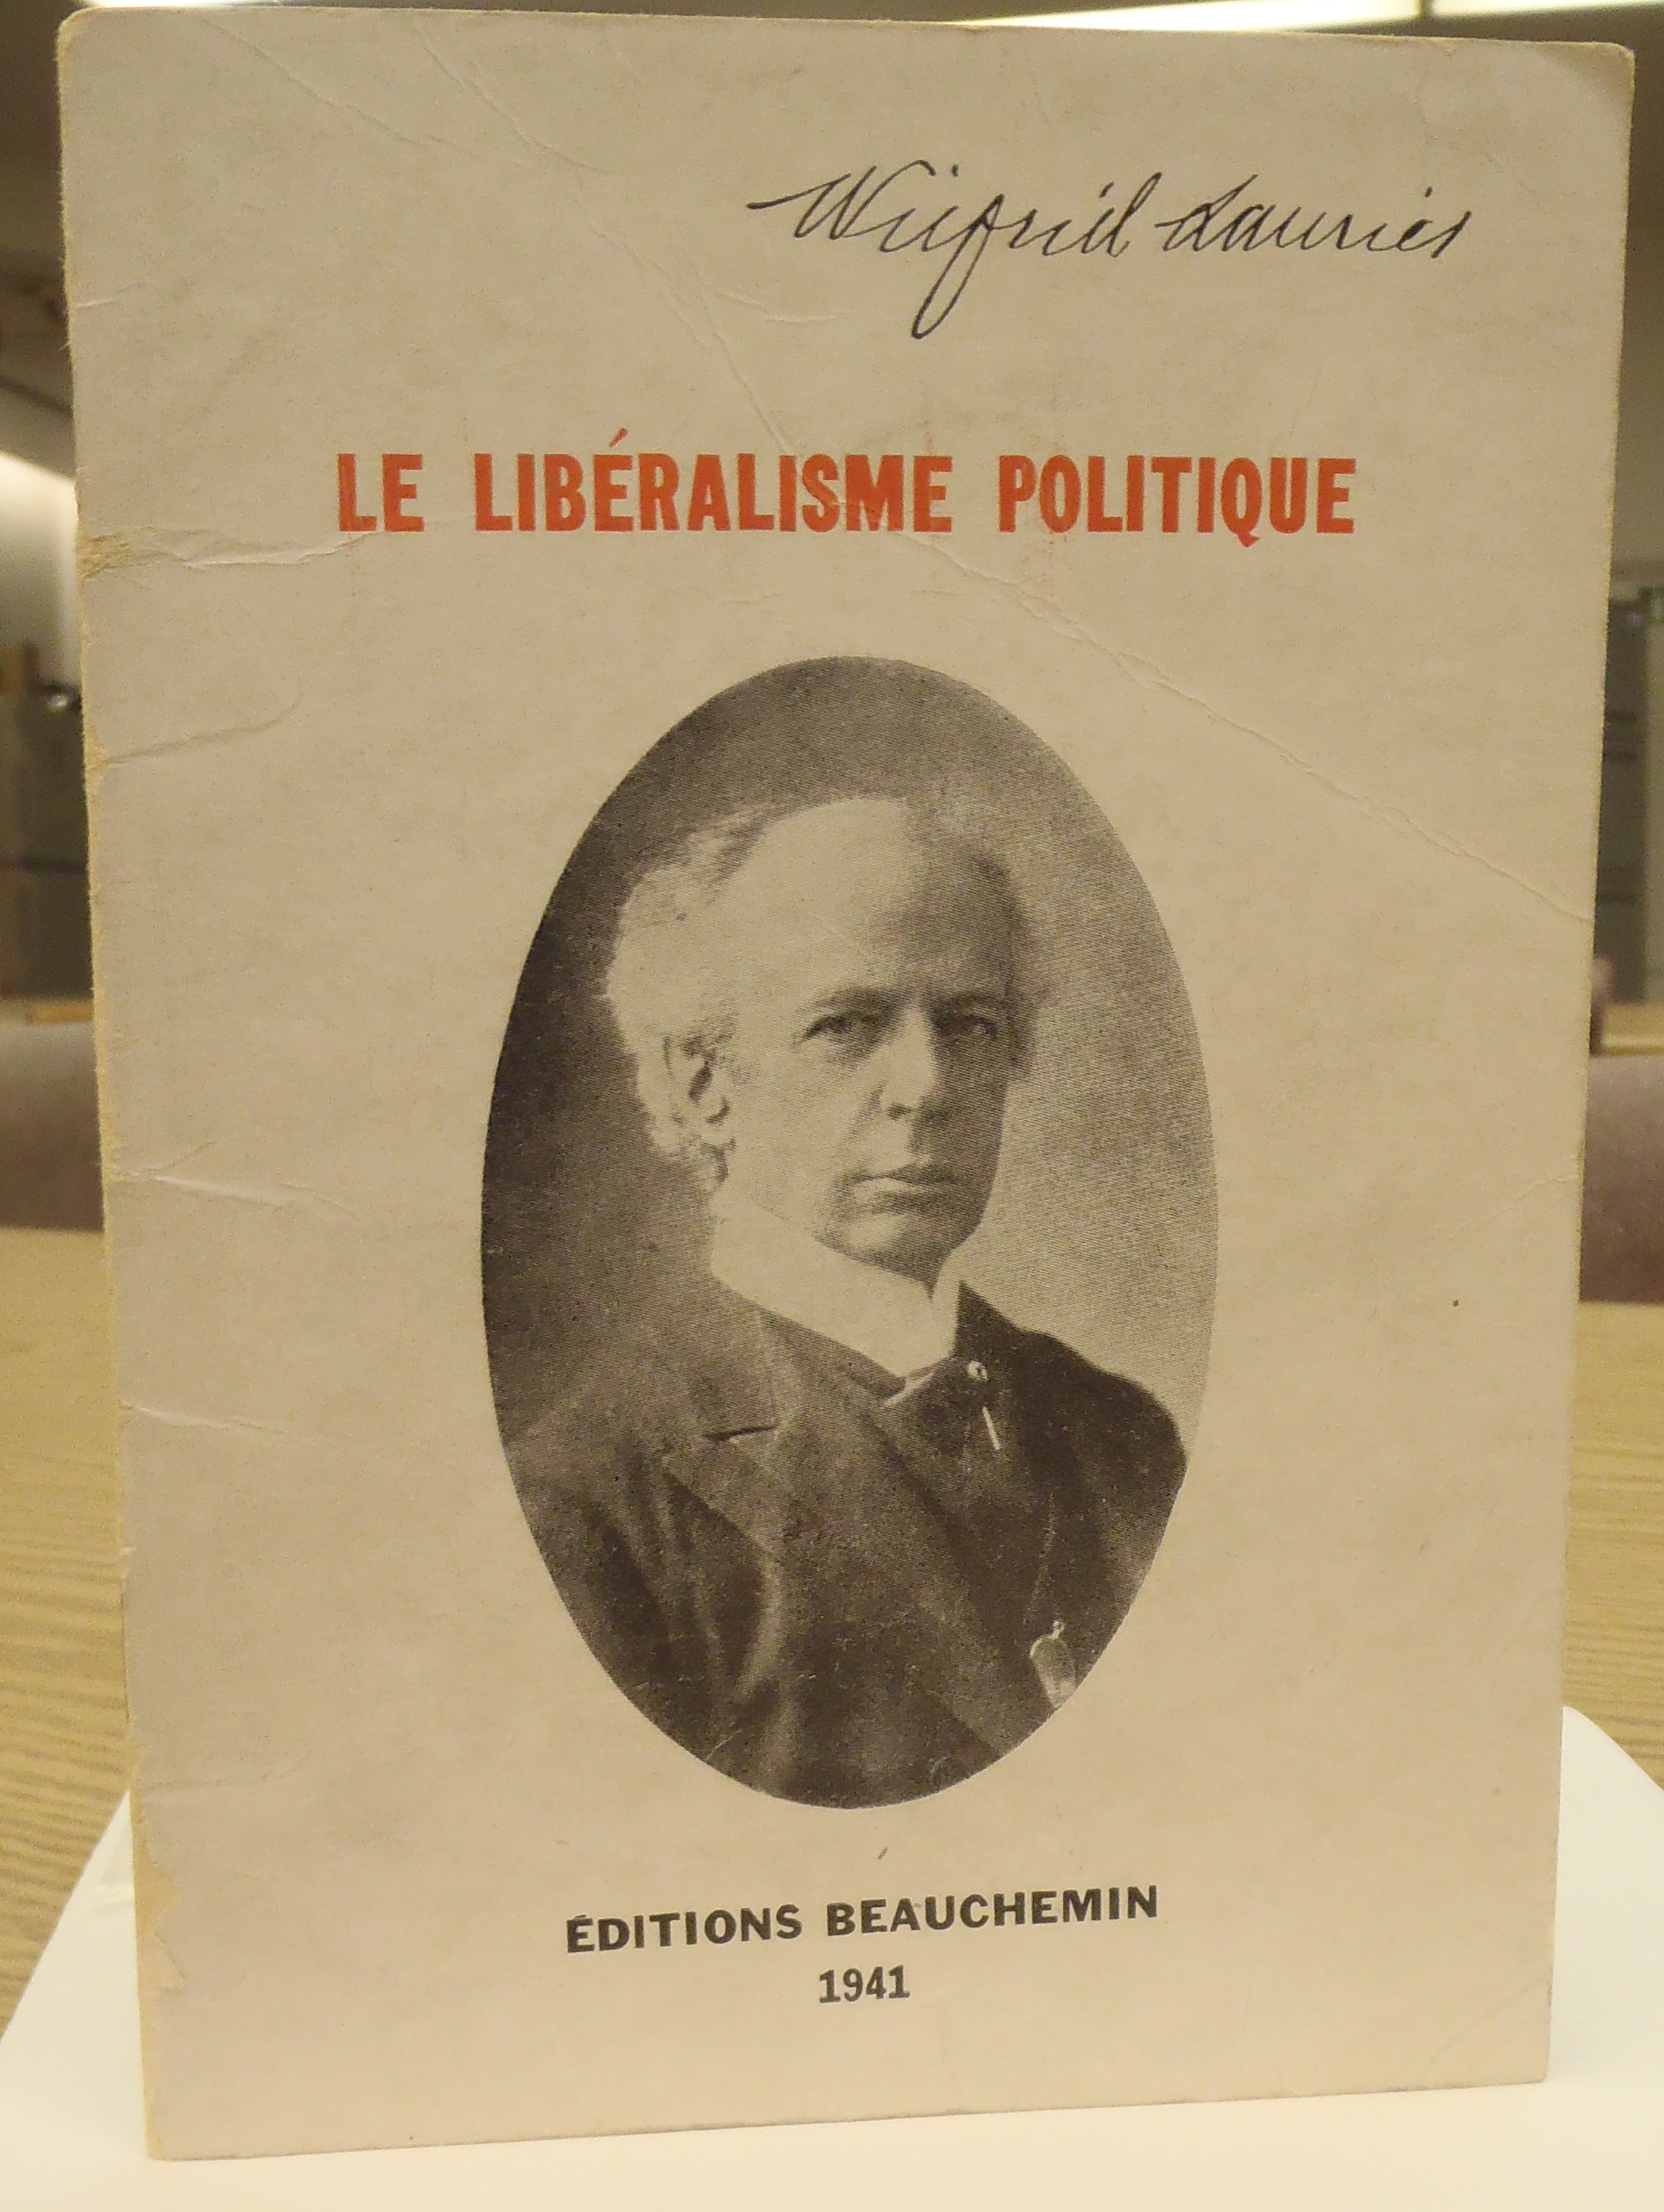 Le libéralisme politique [Political Liberalism] — the classic lecture given by Laurier on June 26, 1877, reissued in 1941. CMH, Library, GEN JL 197 L5 L38 1941. Photo: Xavier Gélinas, PB100739